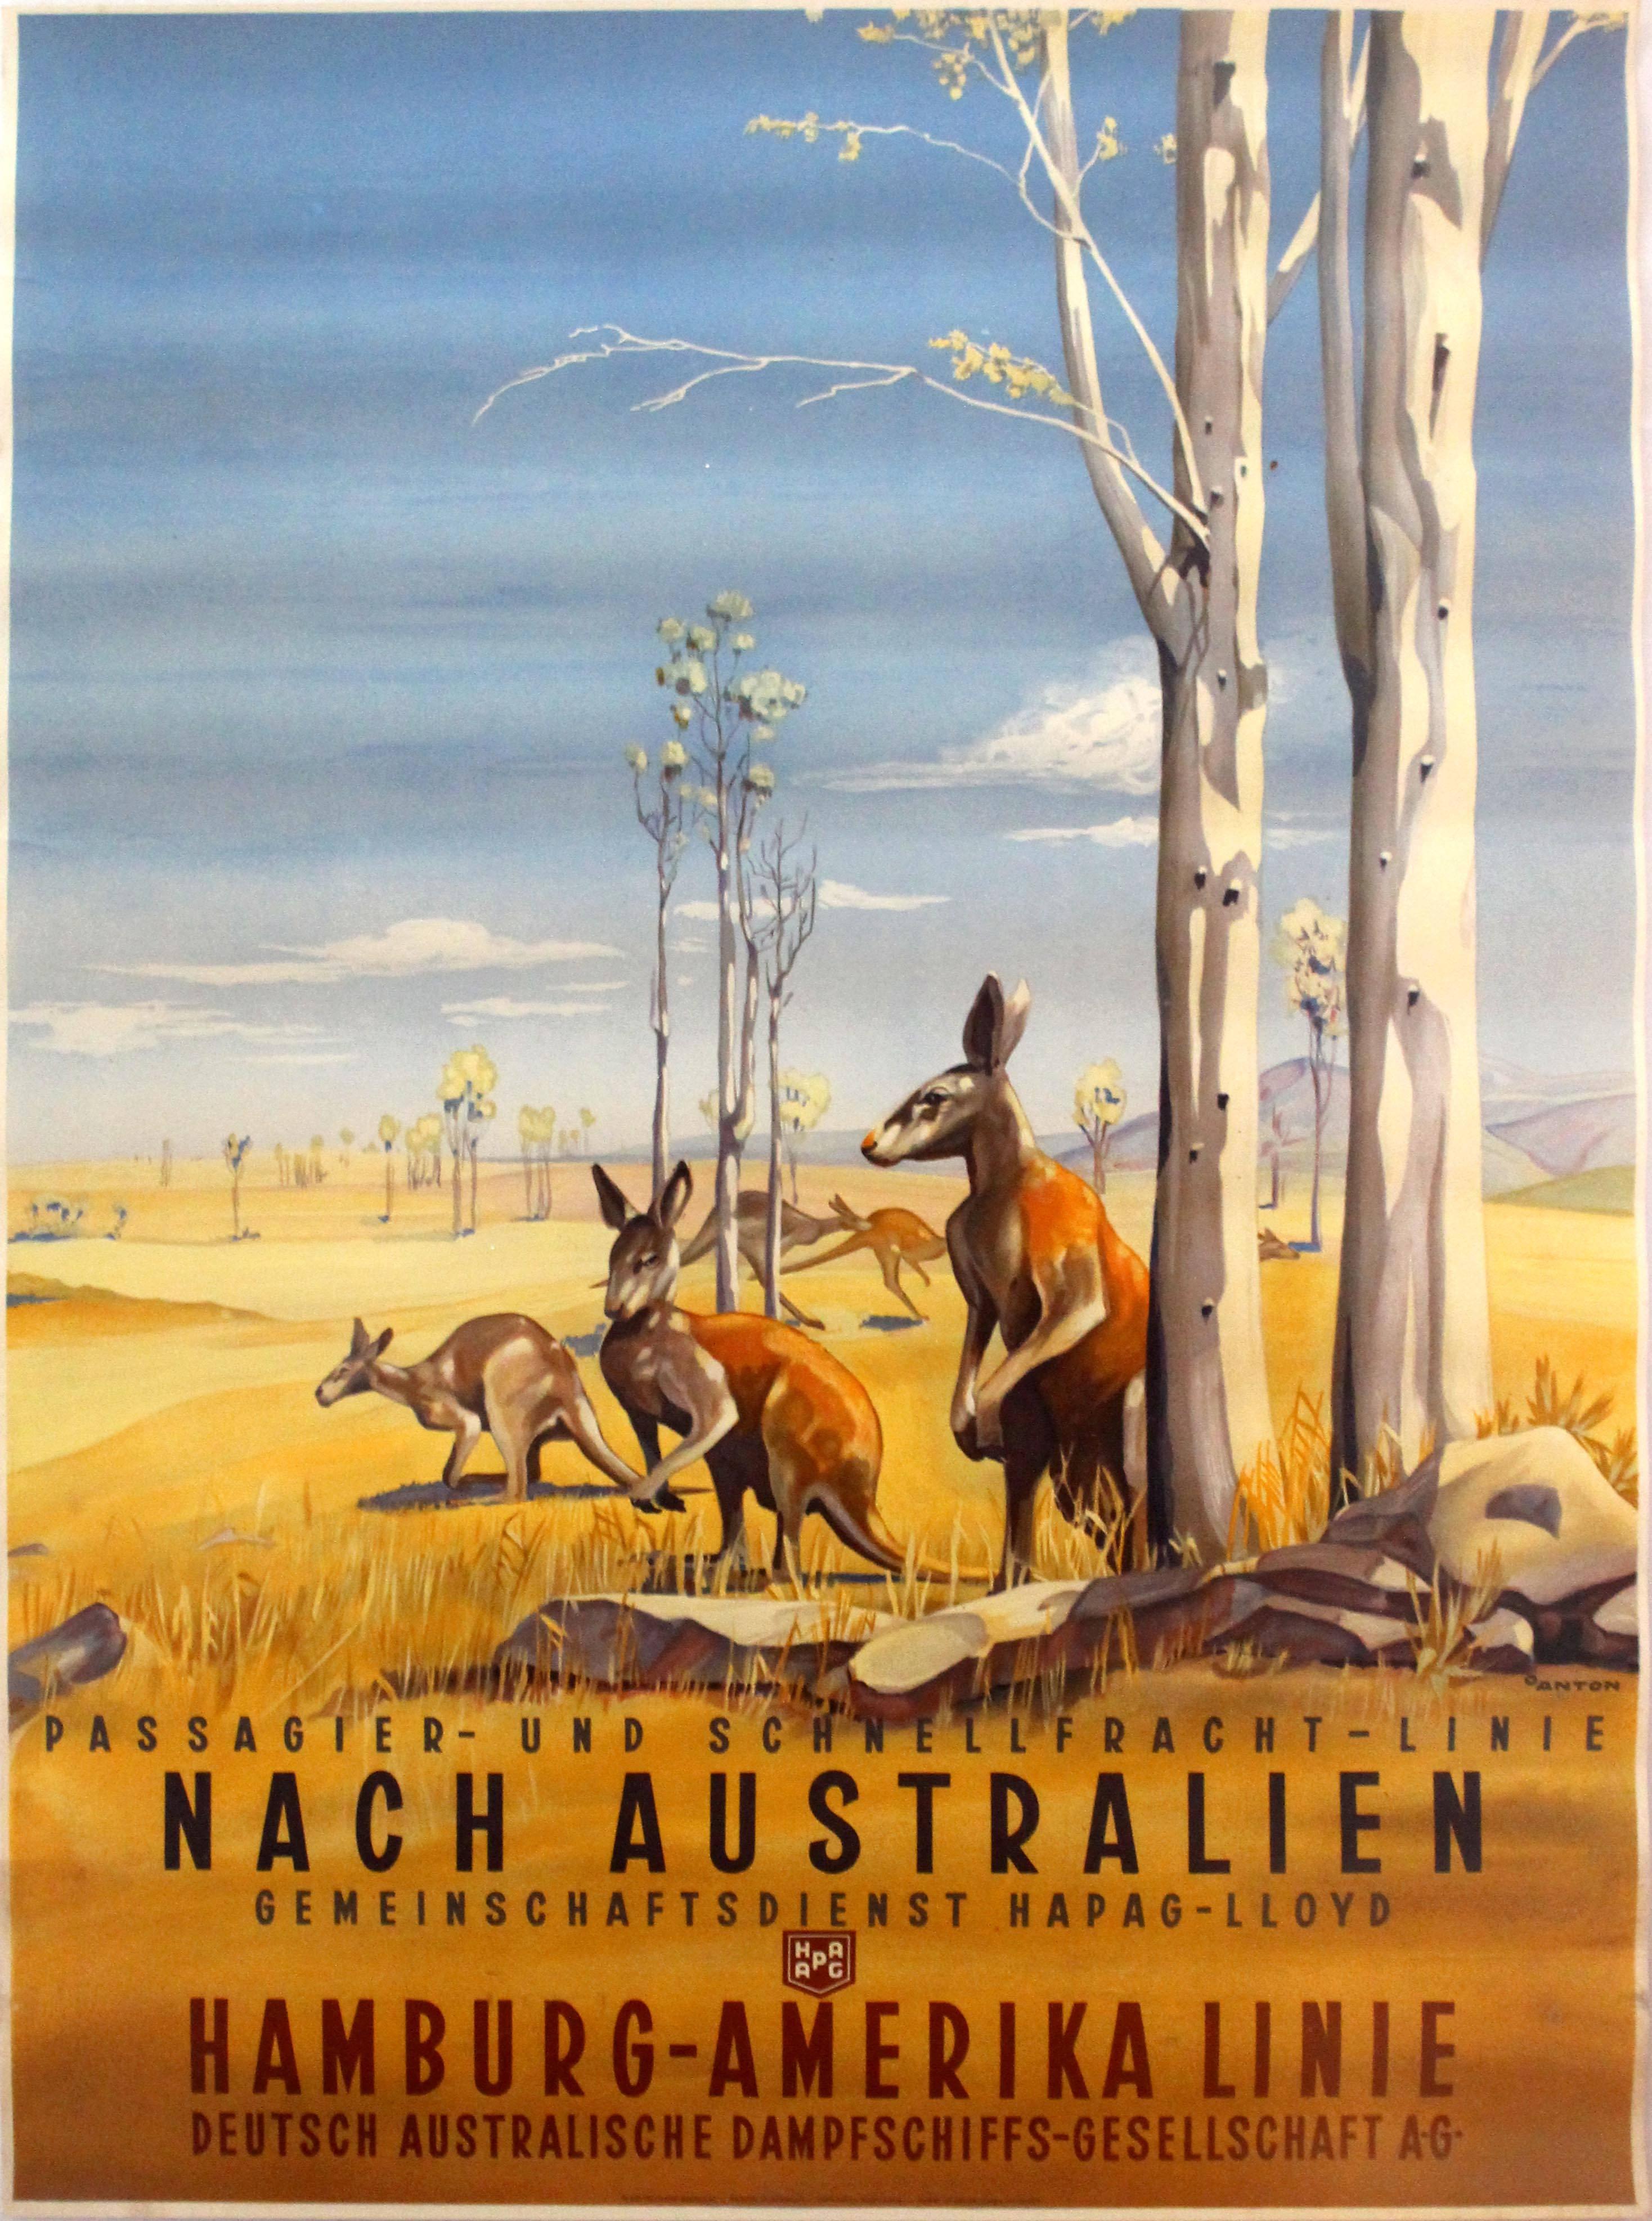 Anton Print - Original 1930s Travel Poster Advertising HAPAG Cruises To Australia - Kangaroos